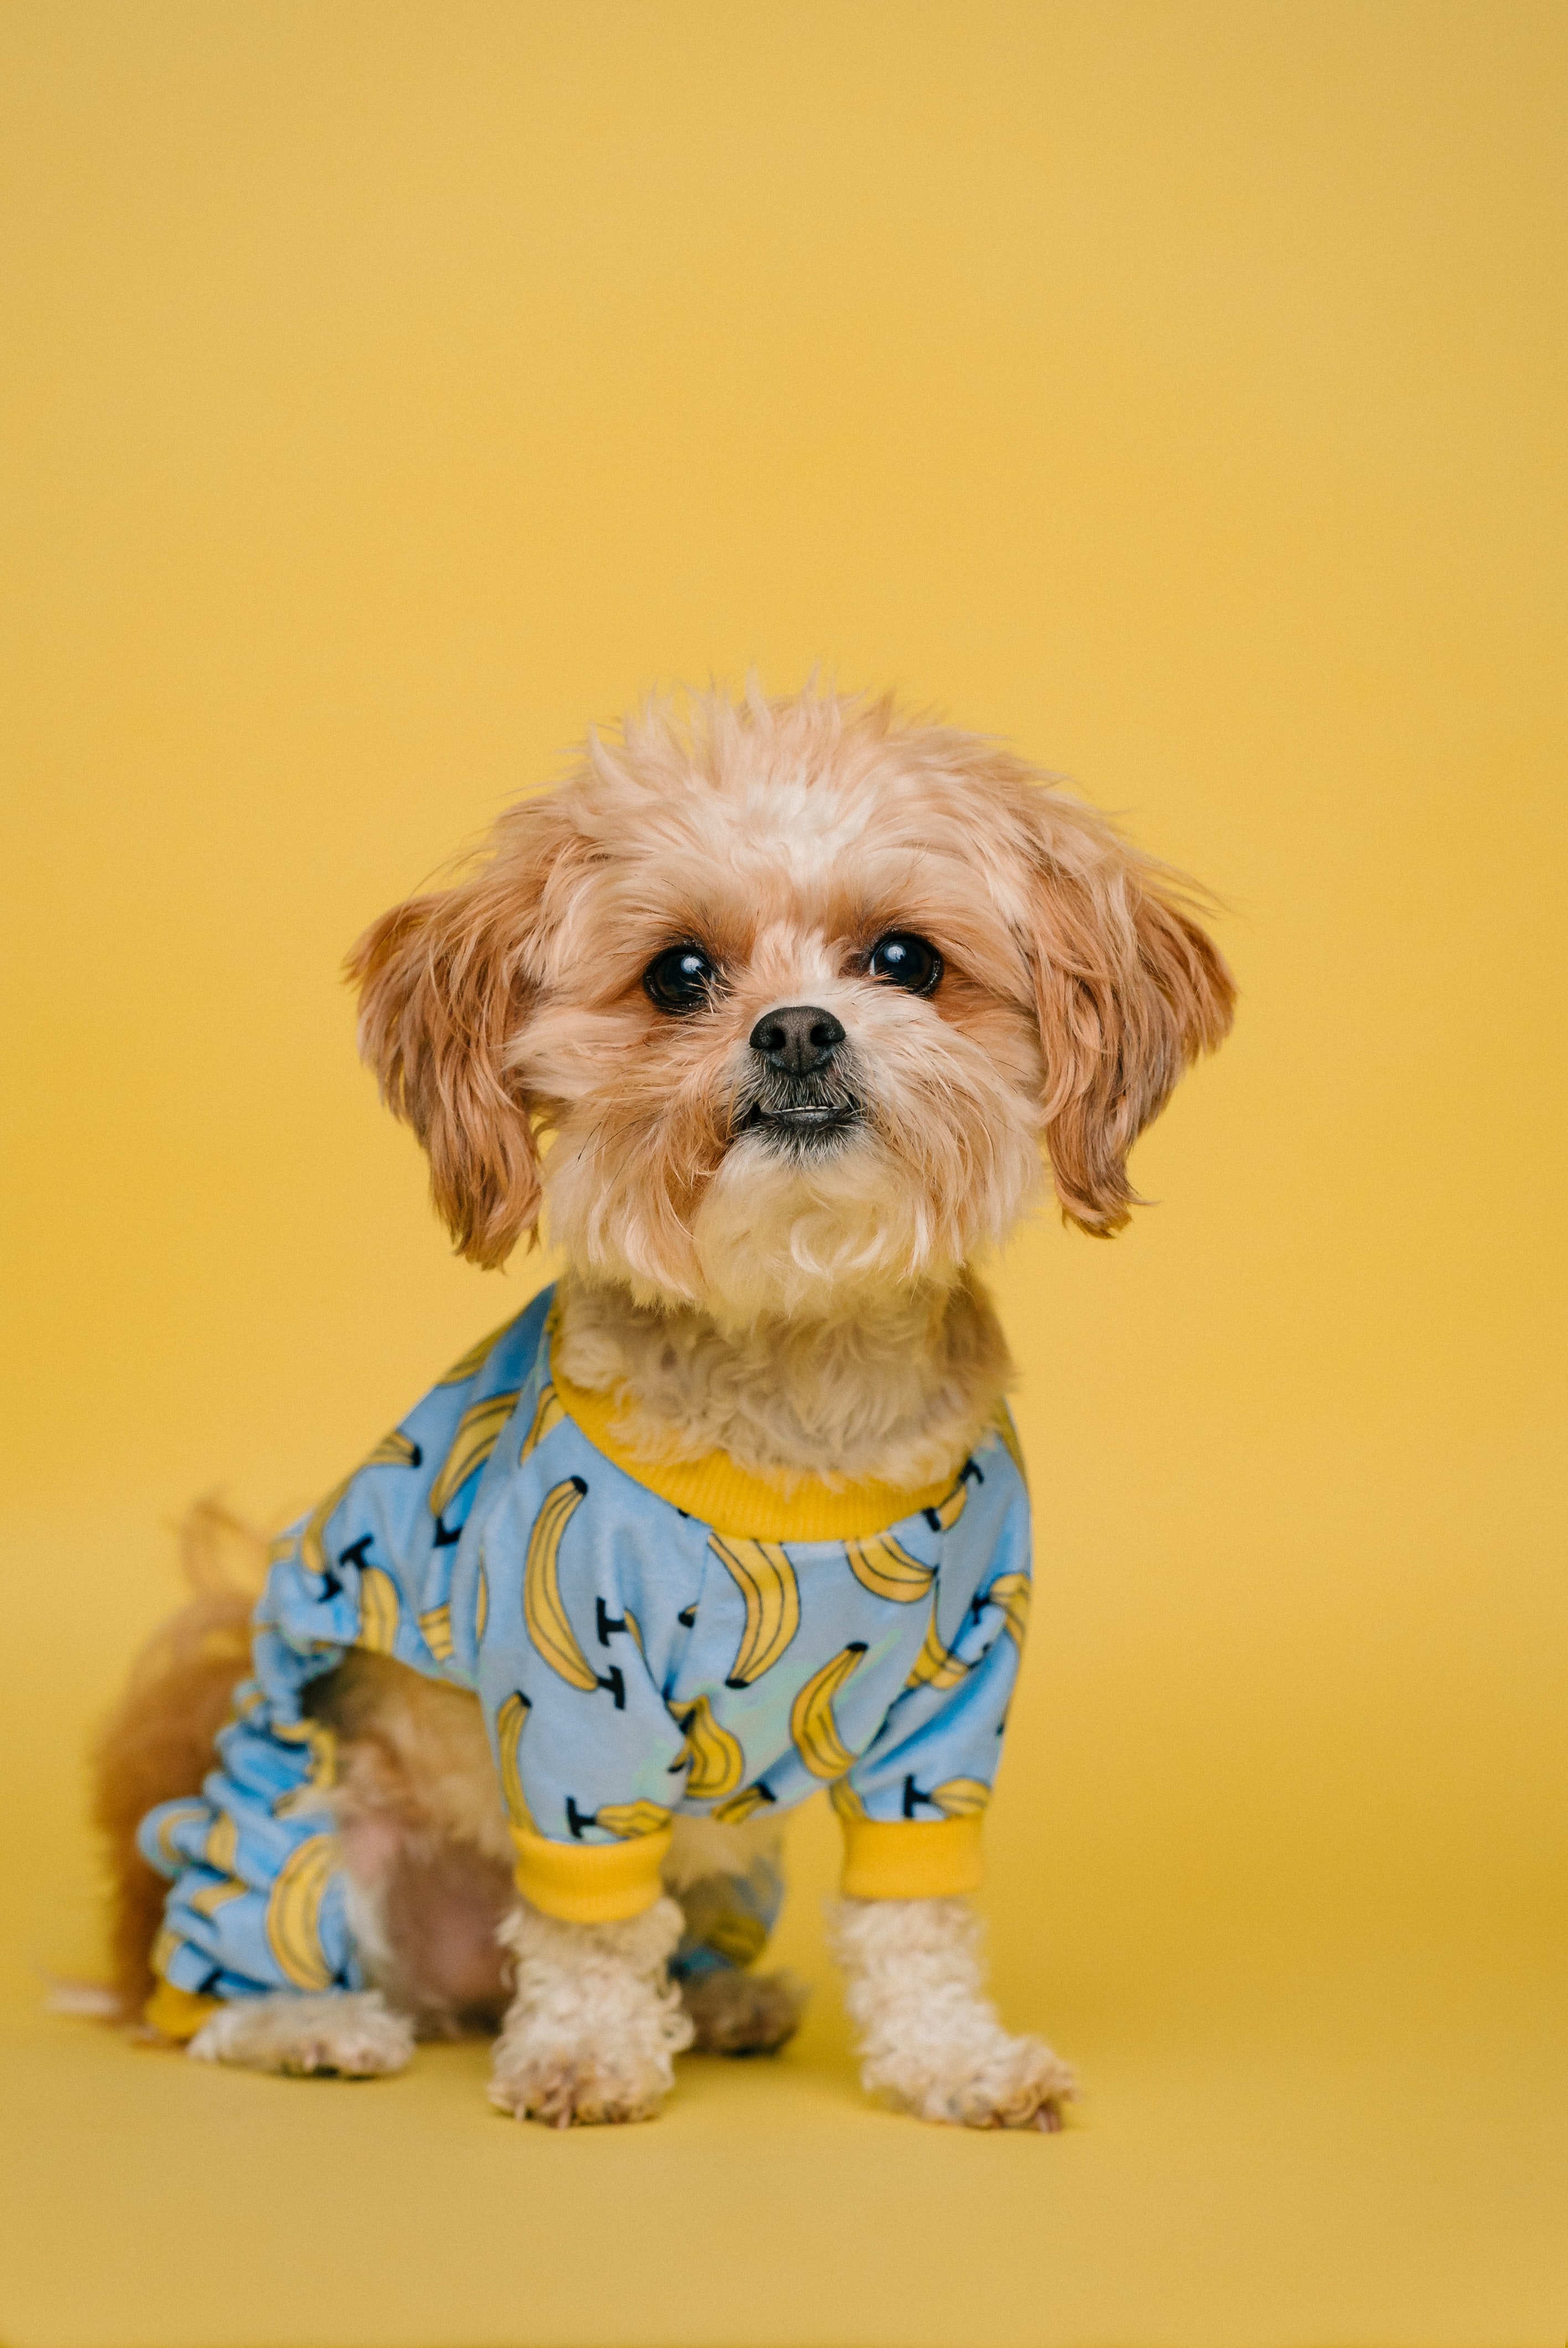 Small dog wearing banana-print pajamas, sitting in front of a yellow backdrop.